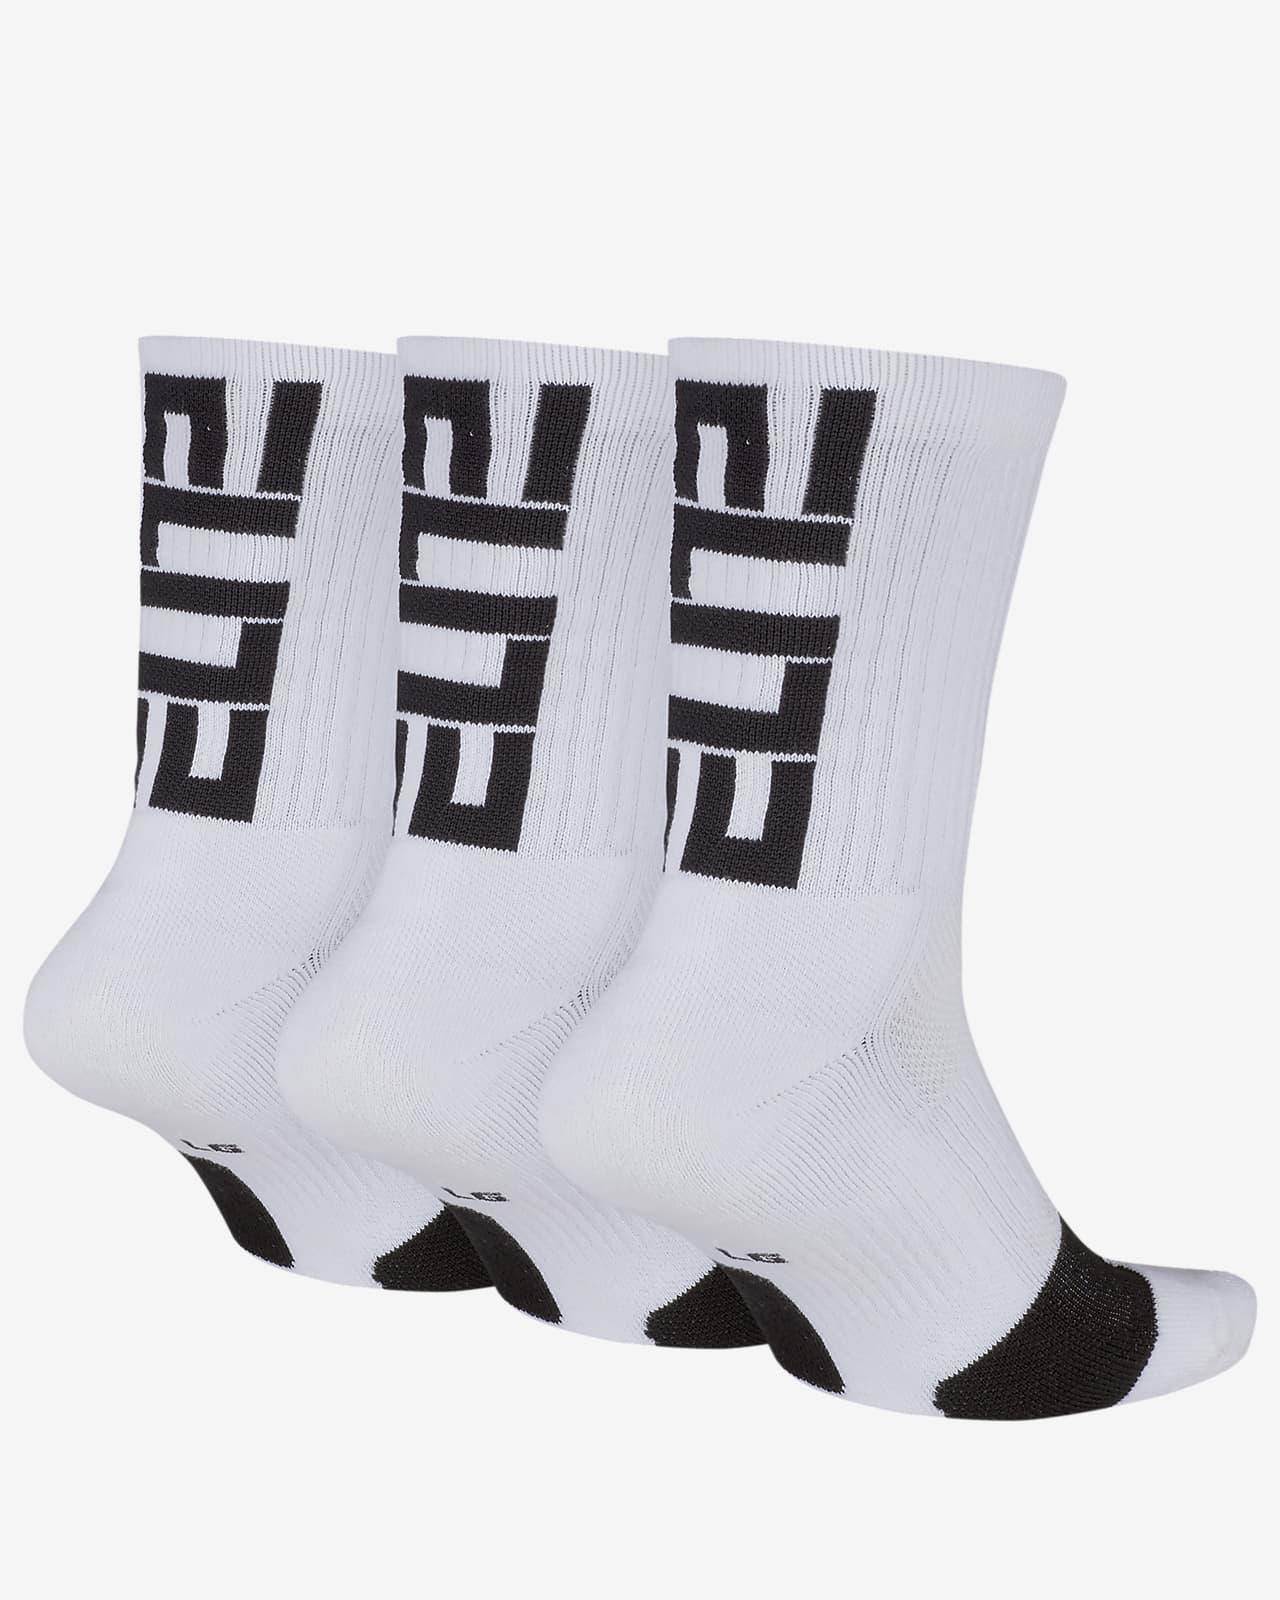 nike elite disruptor socks